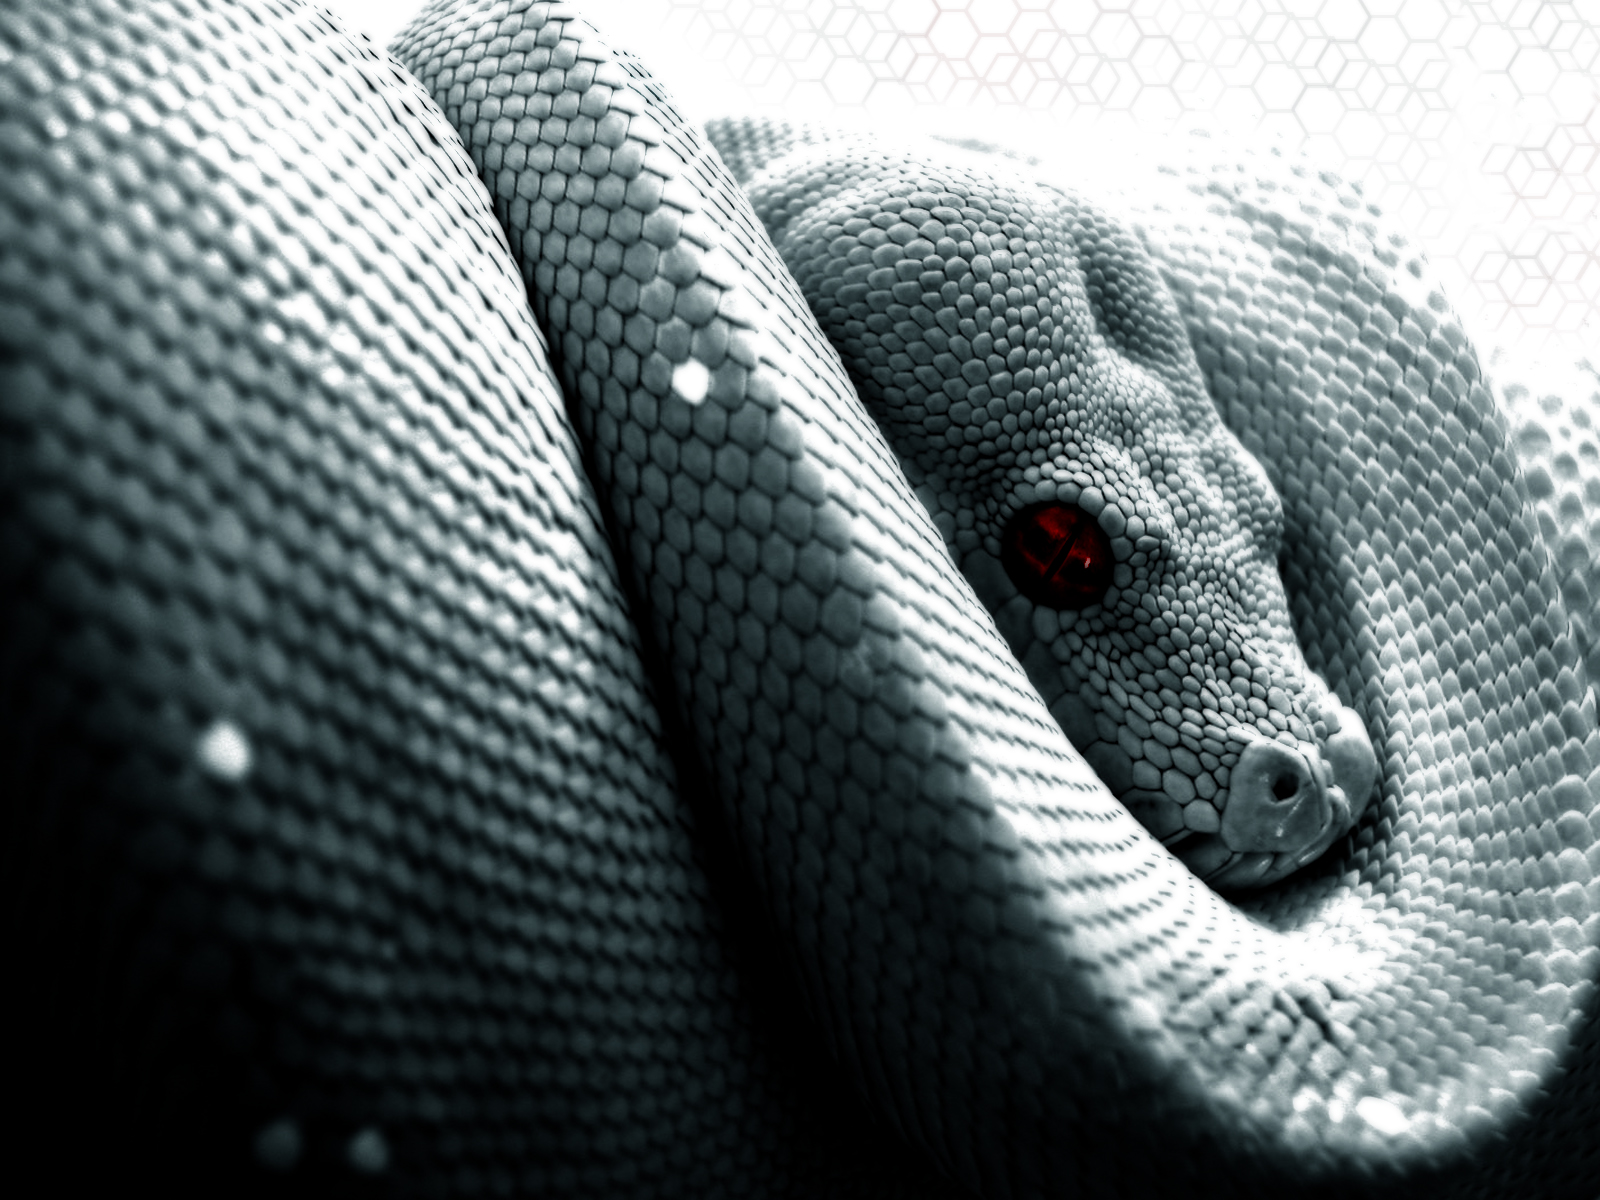 Snake in high-resolution desktop wallpaper.